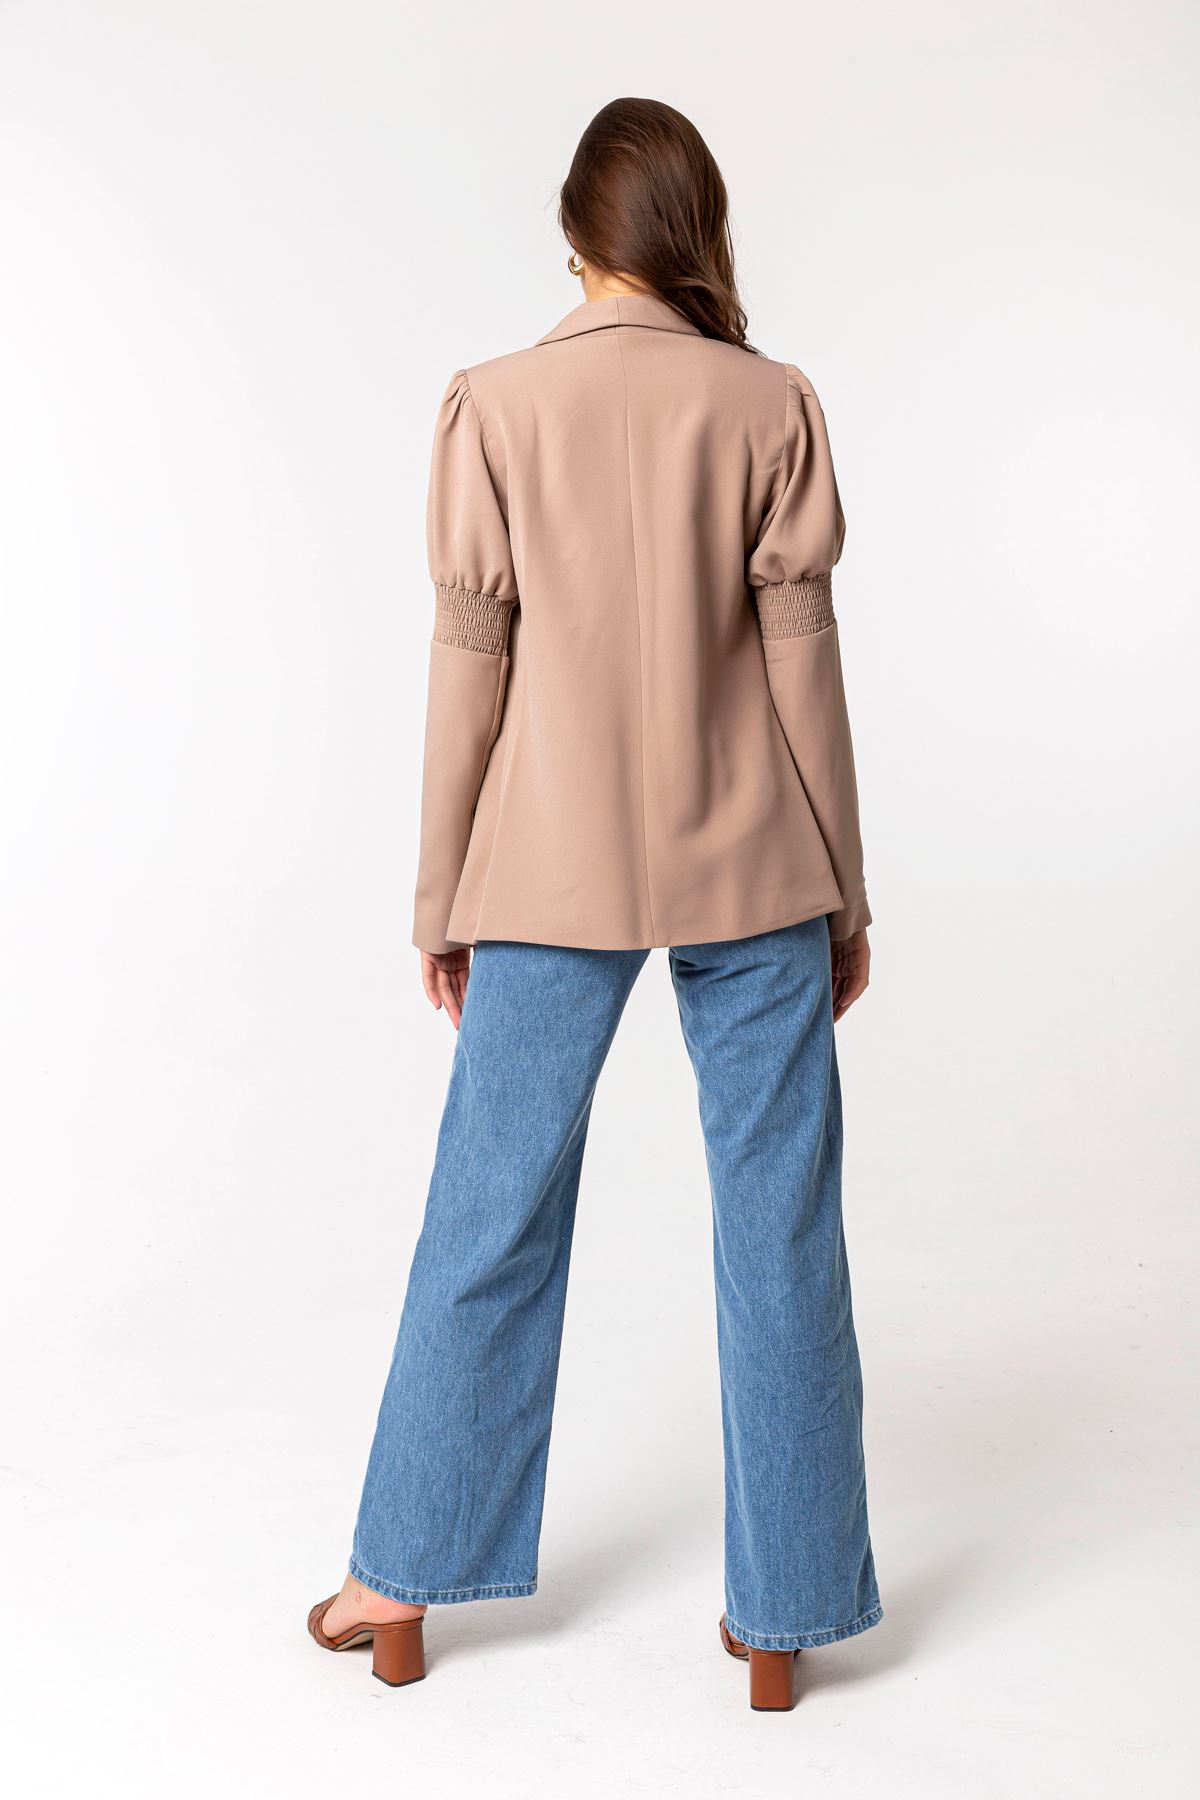 Licra Fabric Long Sleeve Revere Collar Hip Height Classical Women Jacket - Chanterelle 